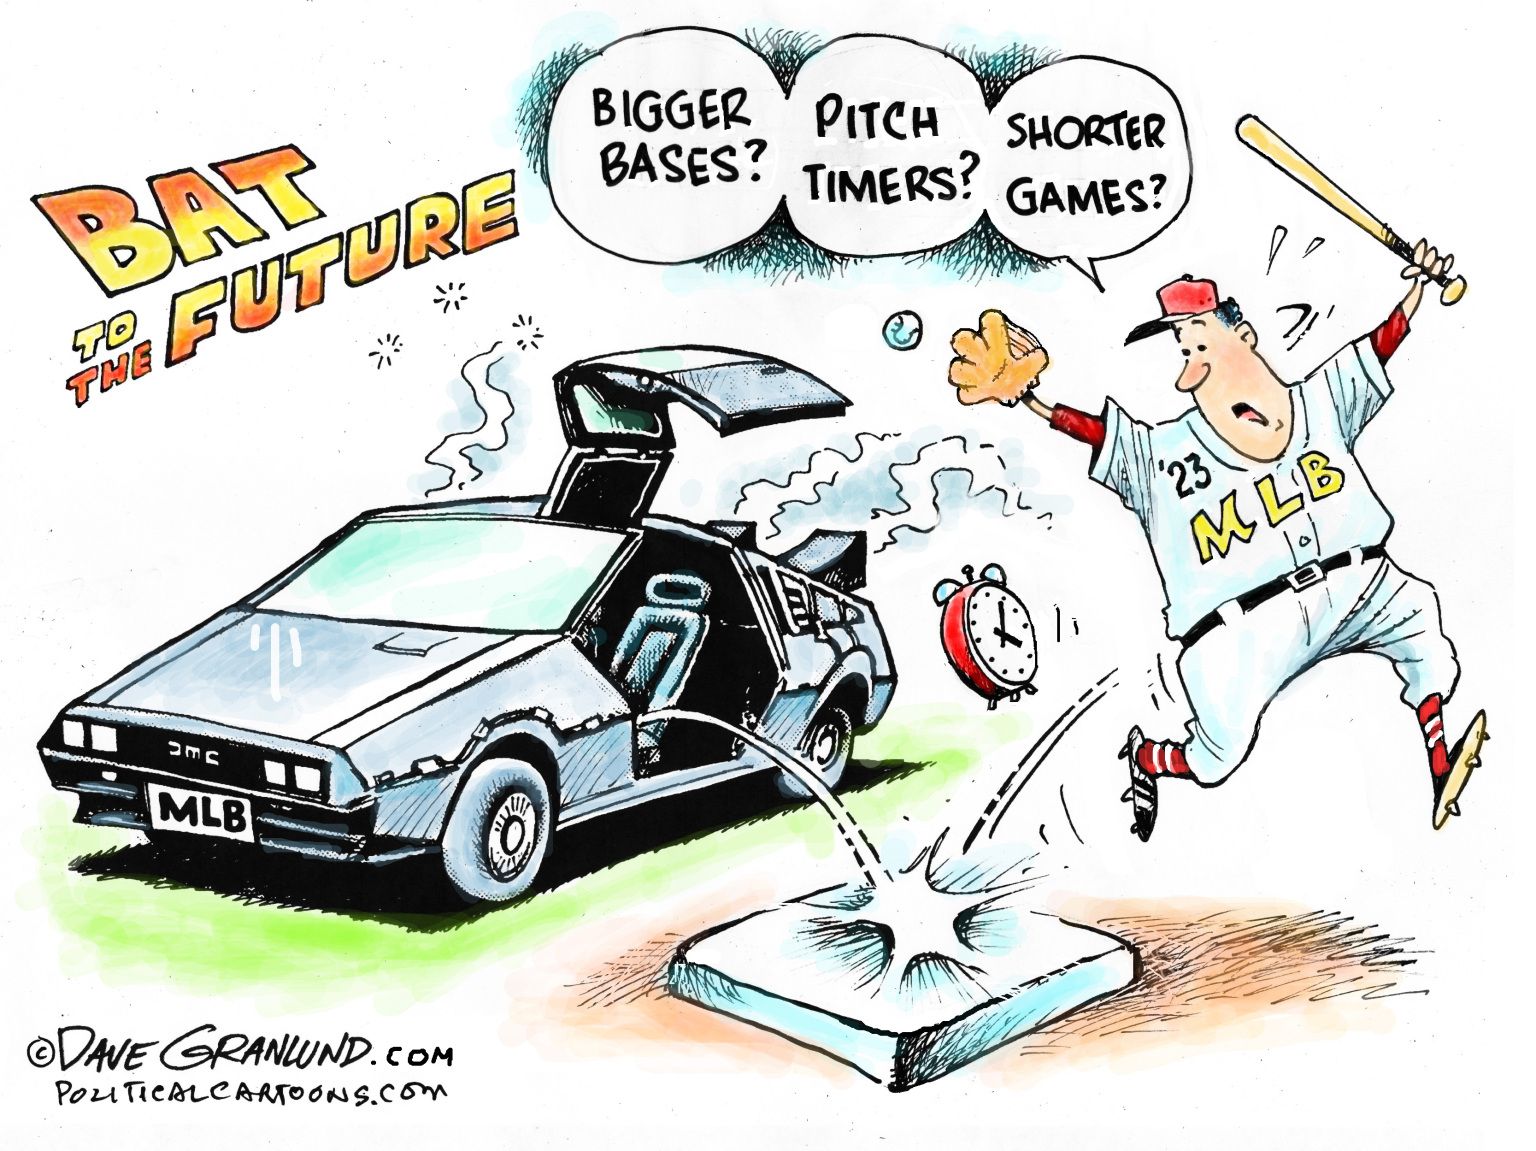 MLB rules change - newsjustin.press - editorial political cartoon